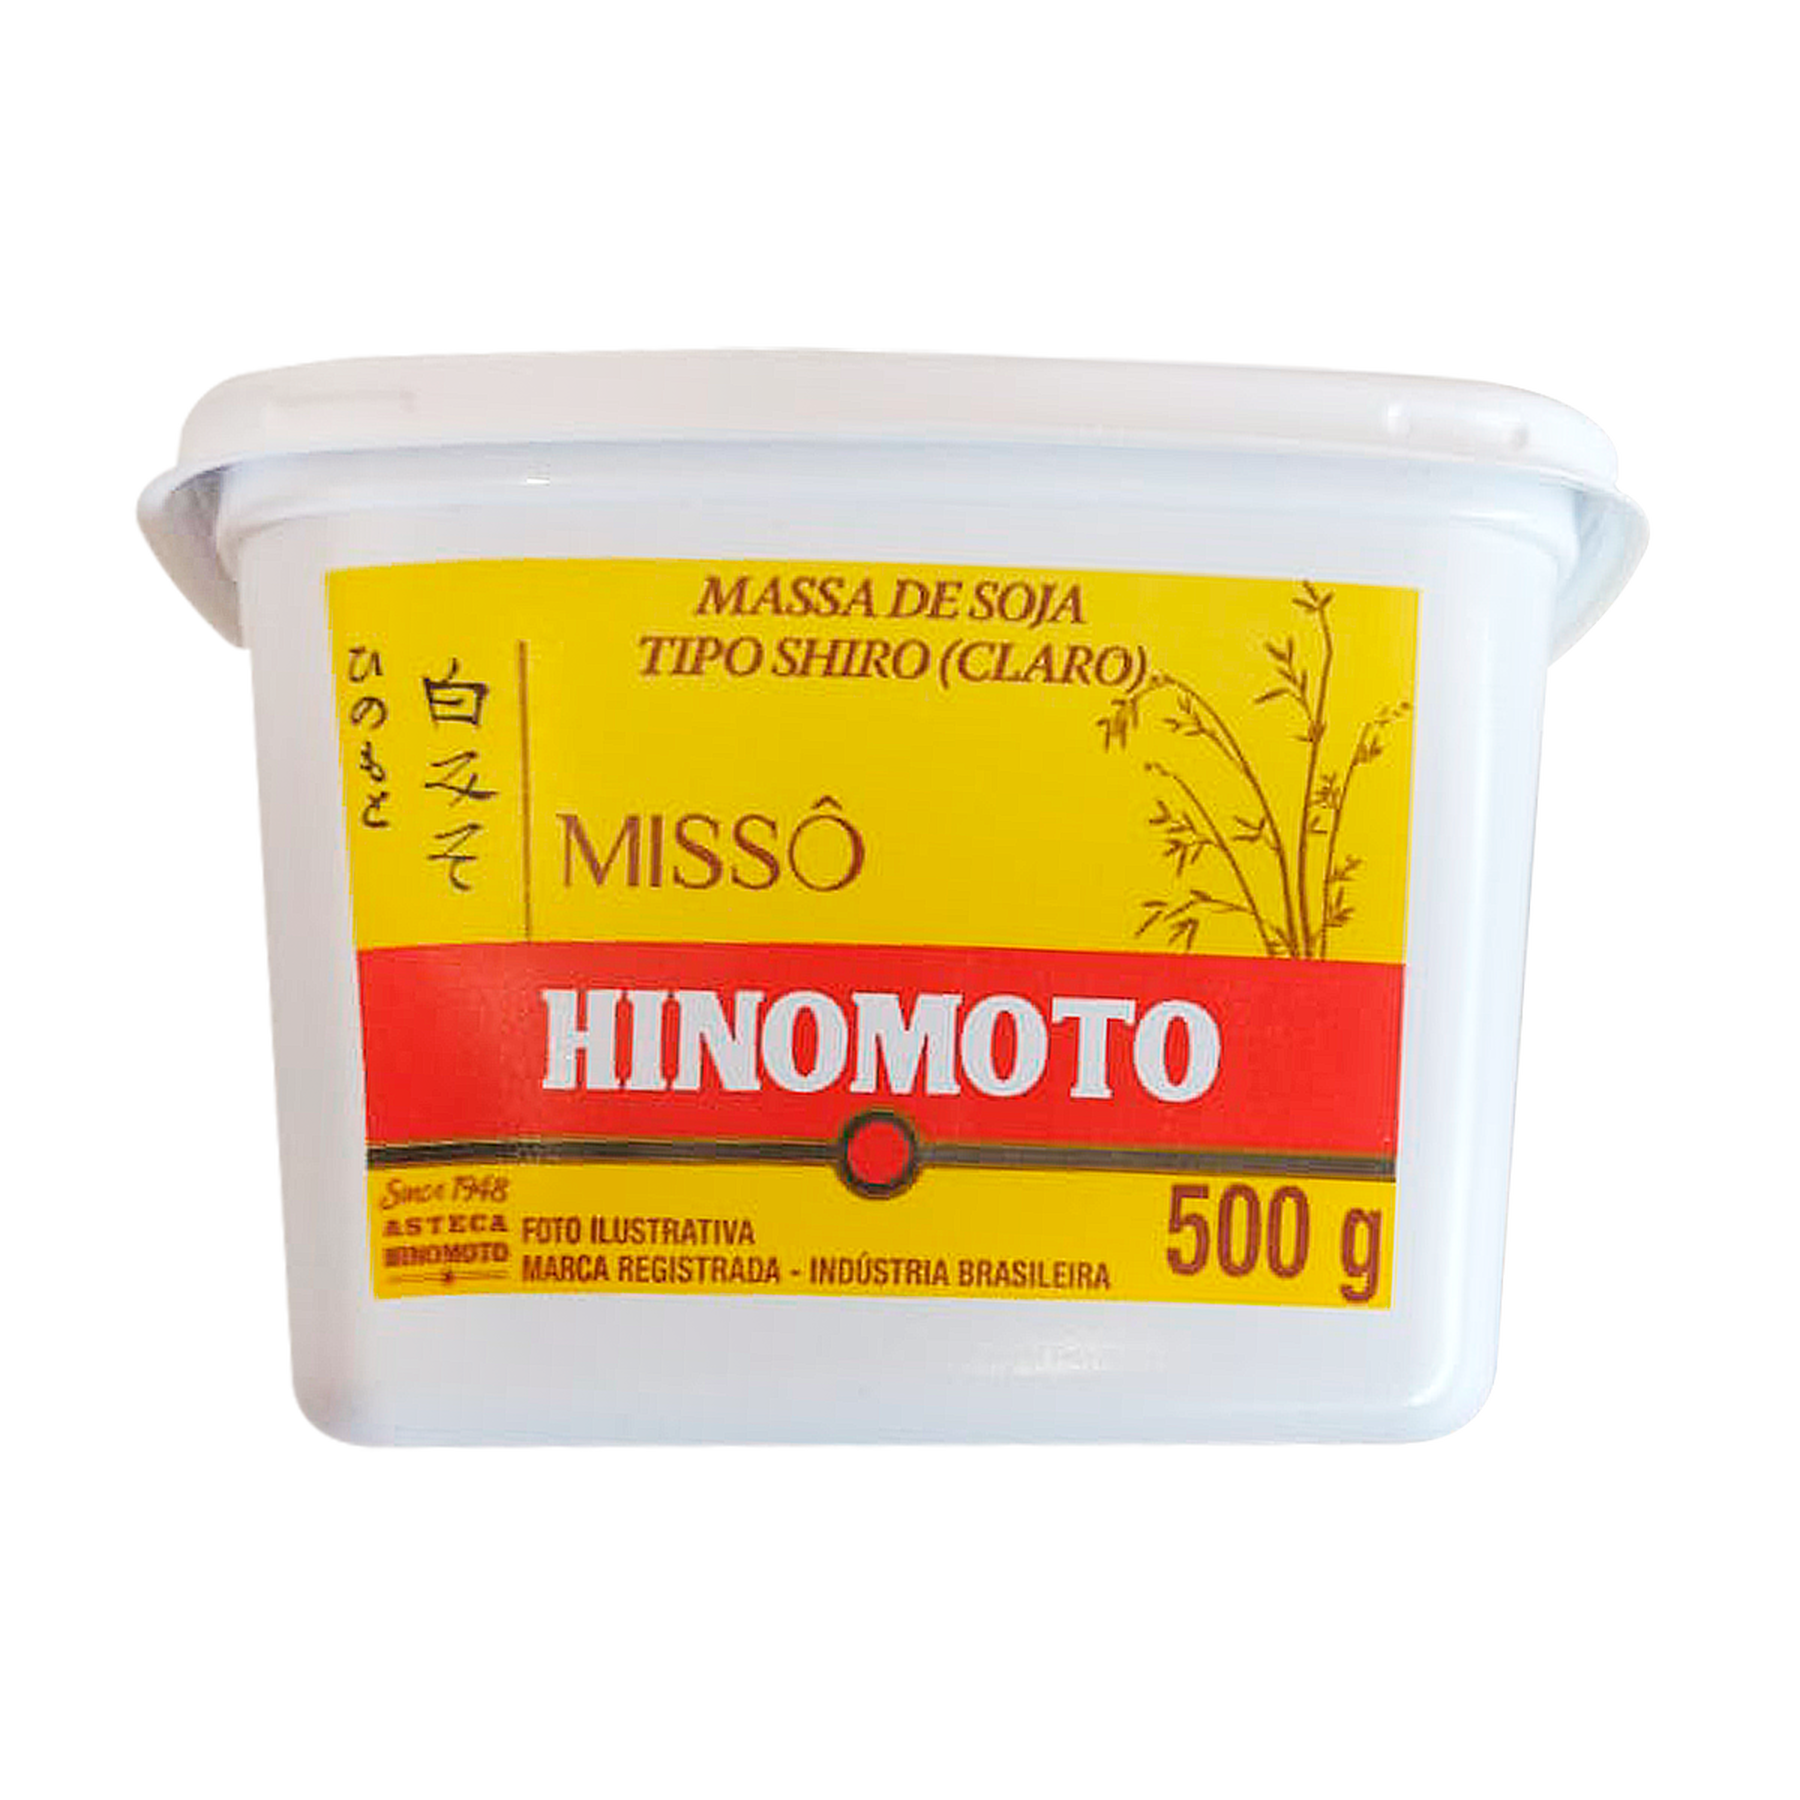 7896181502975 - MISSO SHI HINOM 500G